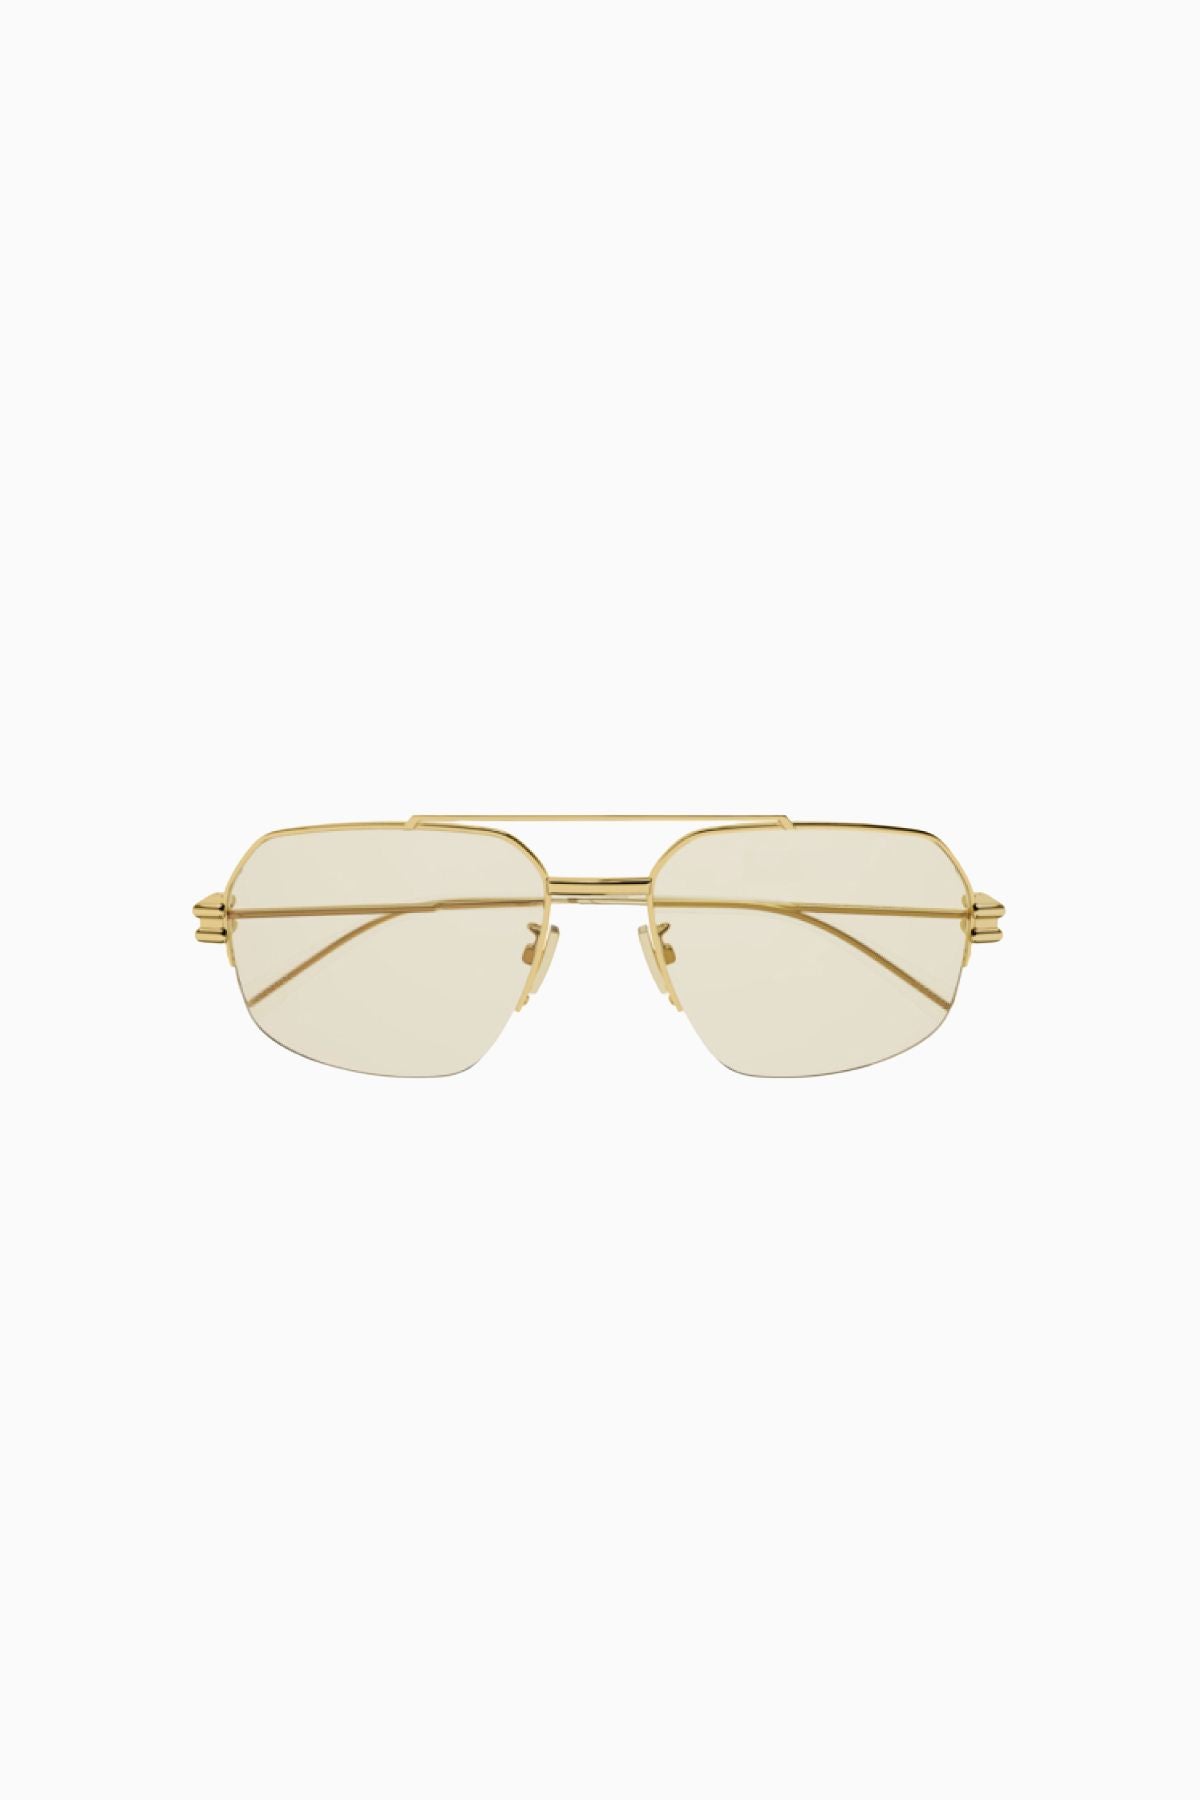 Bottega Veneta Bond Metal Aviator Sunglasses - Gold